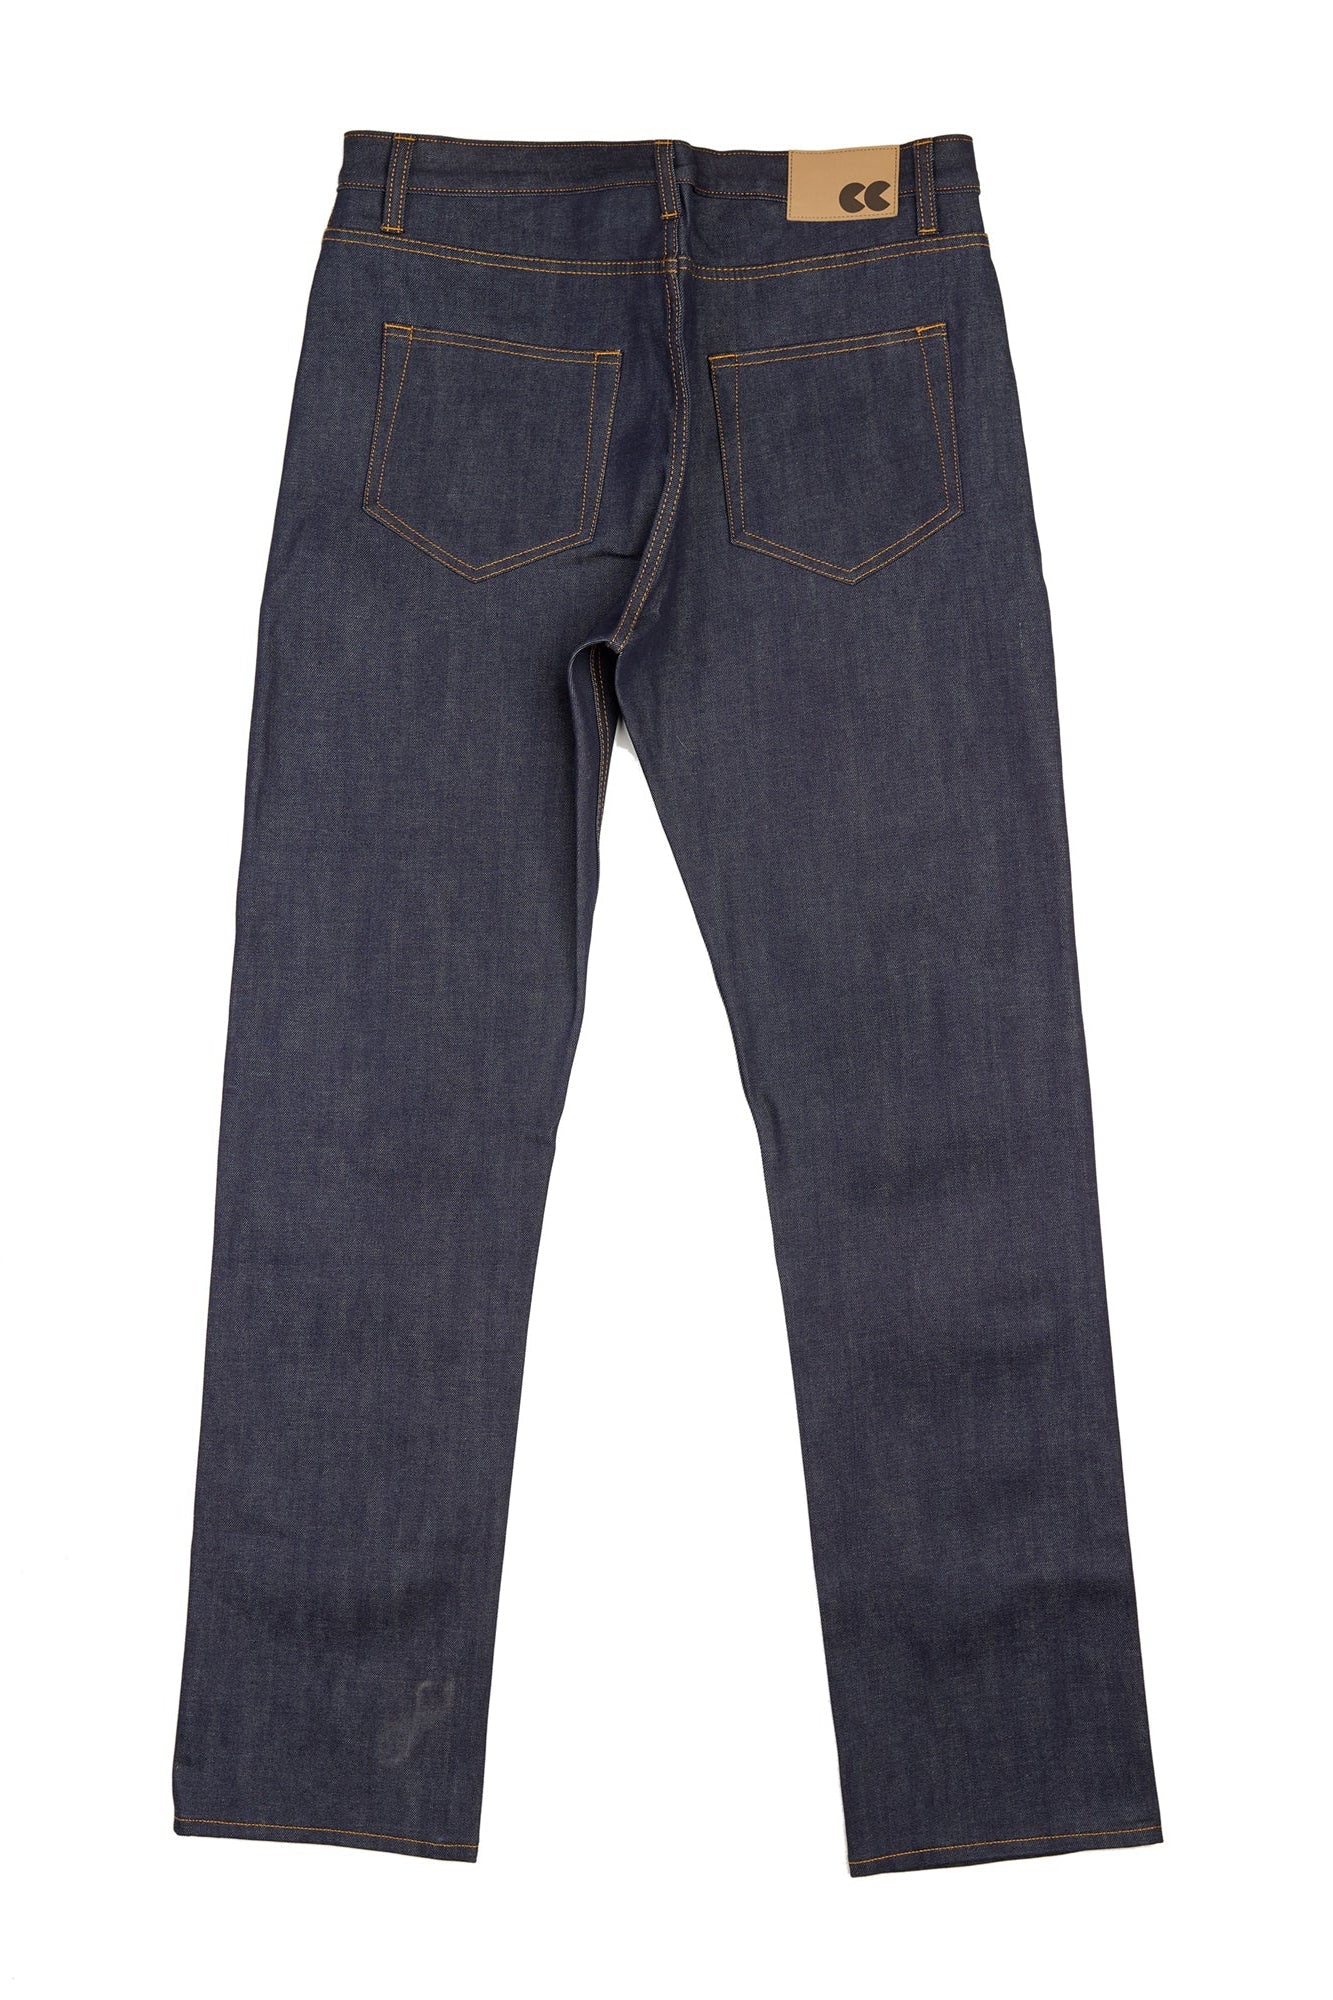 Slim Selvedge Jeans - Dark blue/raw denim - Men